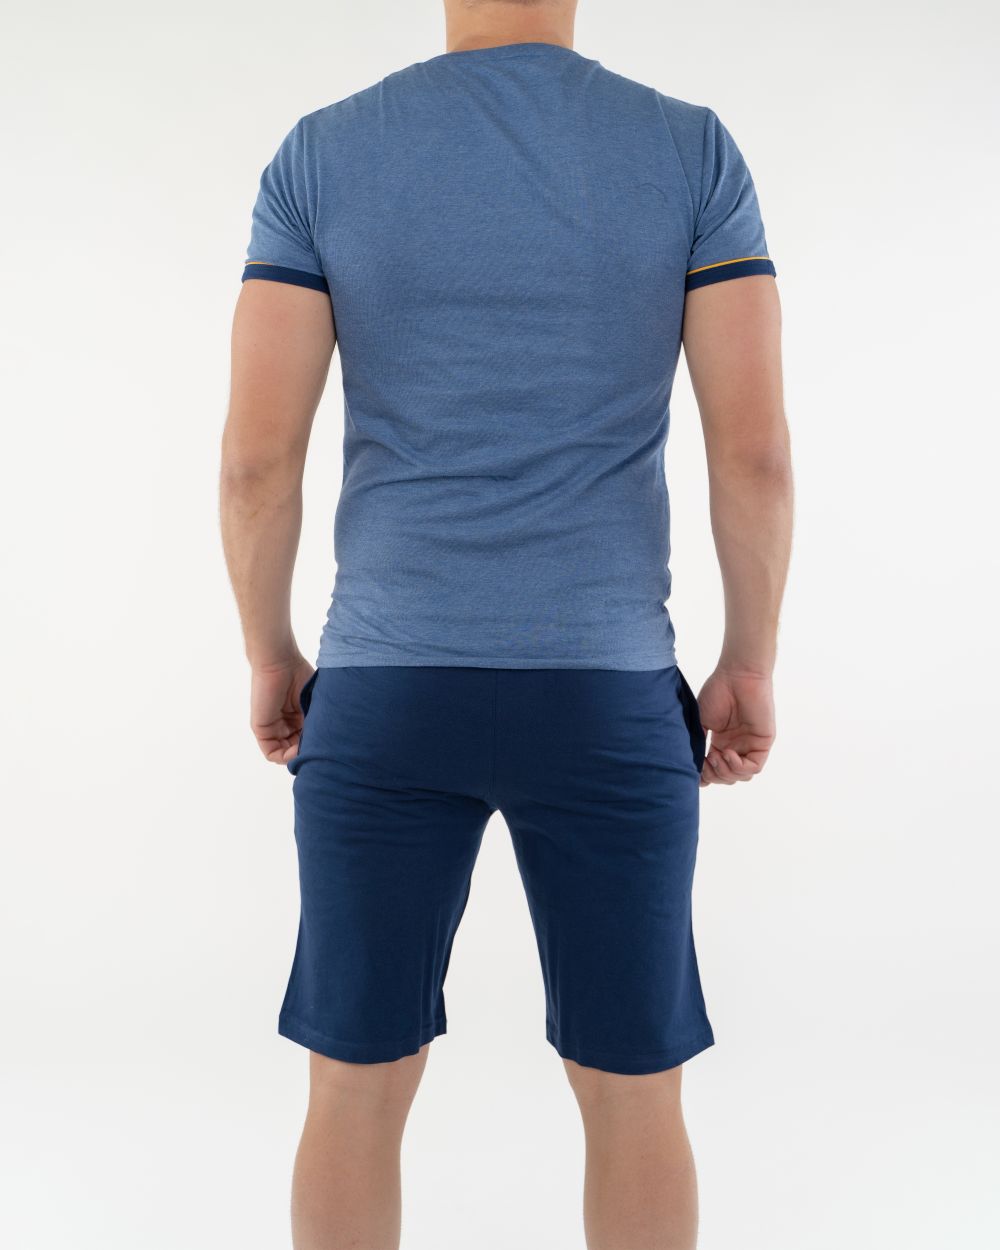 Navigare Intimo - Letnja muška pidžama jeans boje